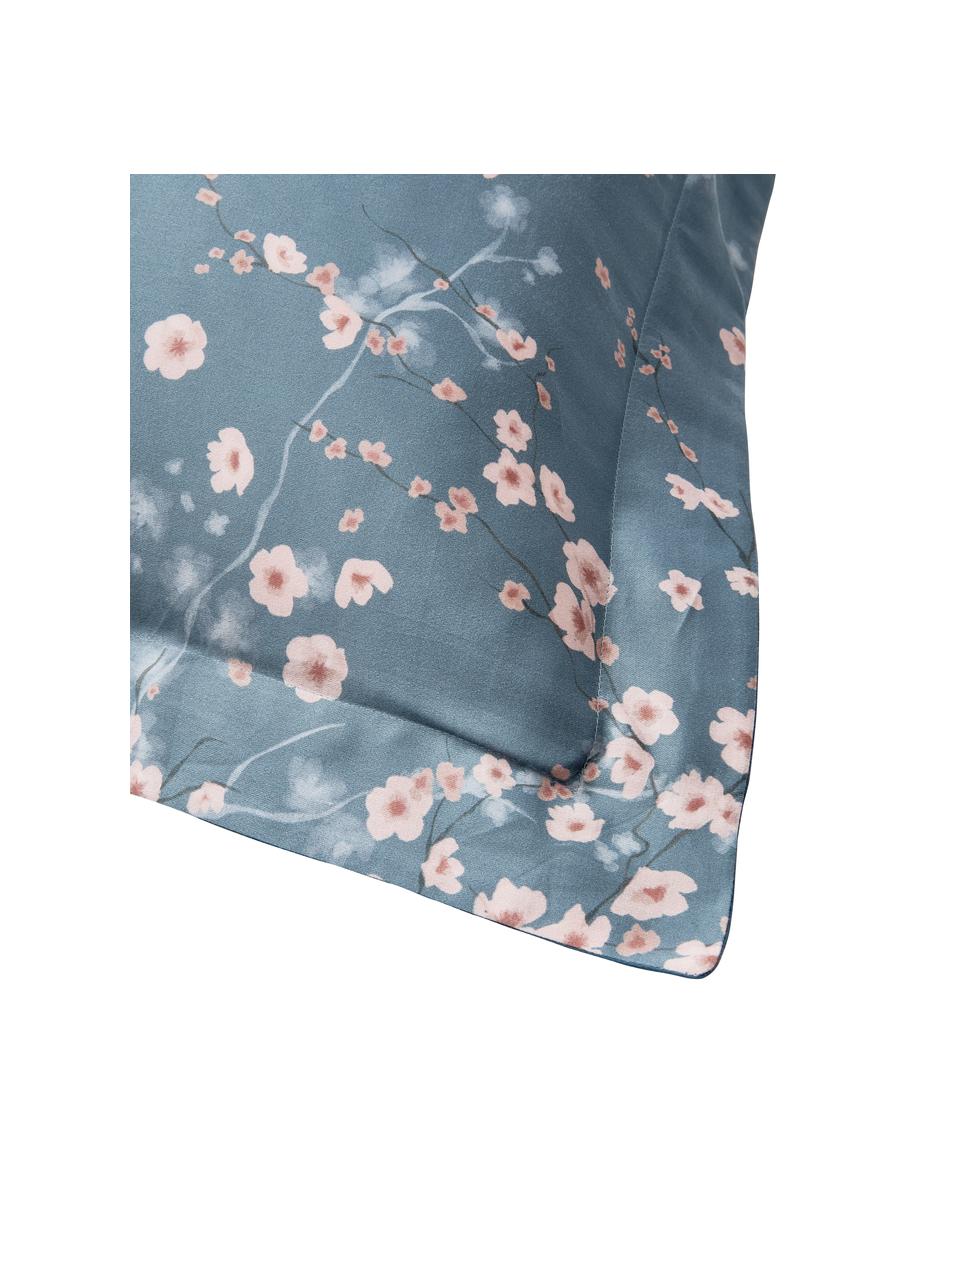 Baumwollsatin-Kopfkissenbezug Sakura mit Blumen-Print in Marineblau, Webart: Satin Fadendichte 250 TC,, Blau, B 40 x L 80 cm